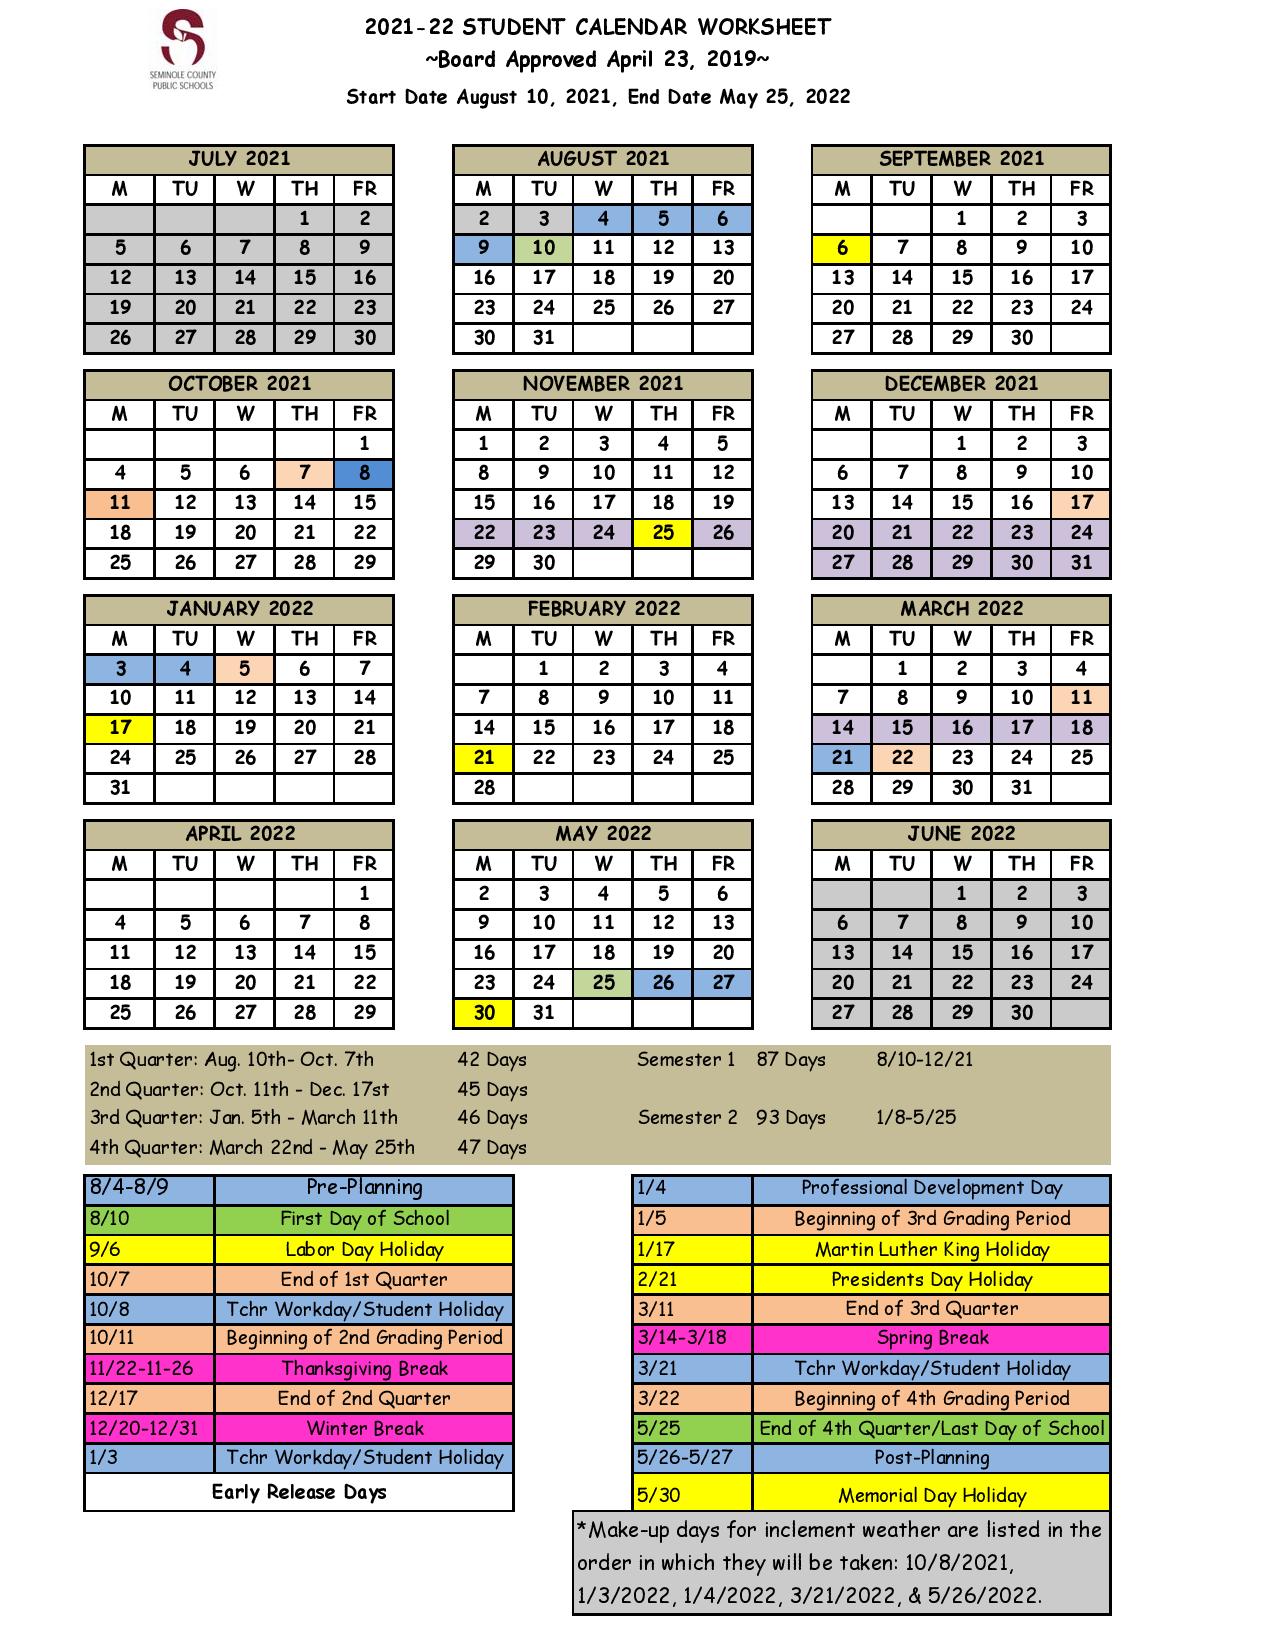 hernando-county-school-calendar-holidays-2021-2022-gambaran